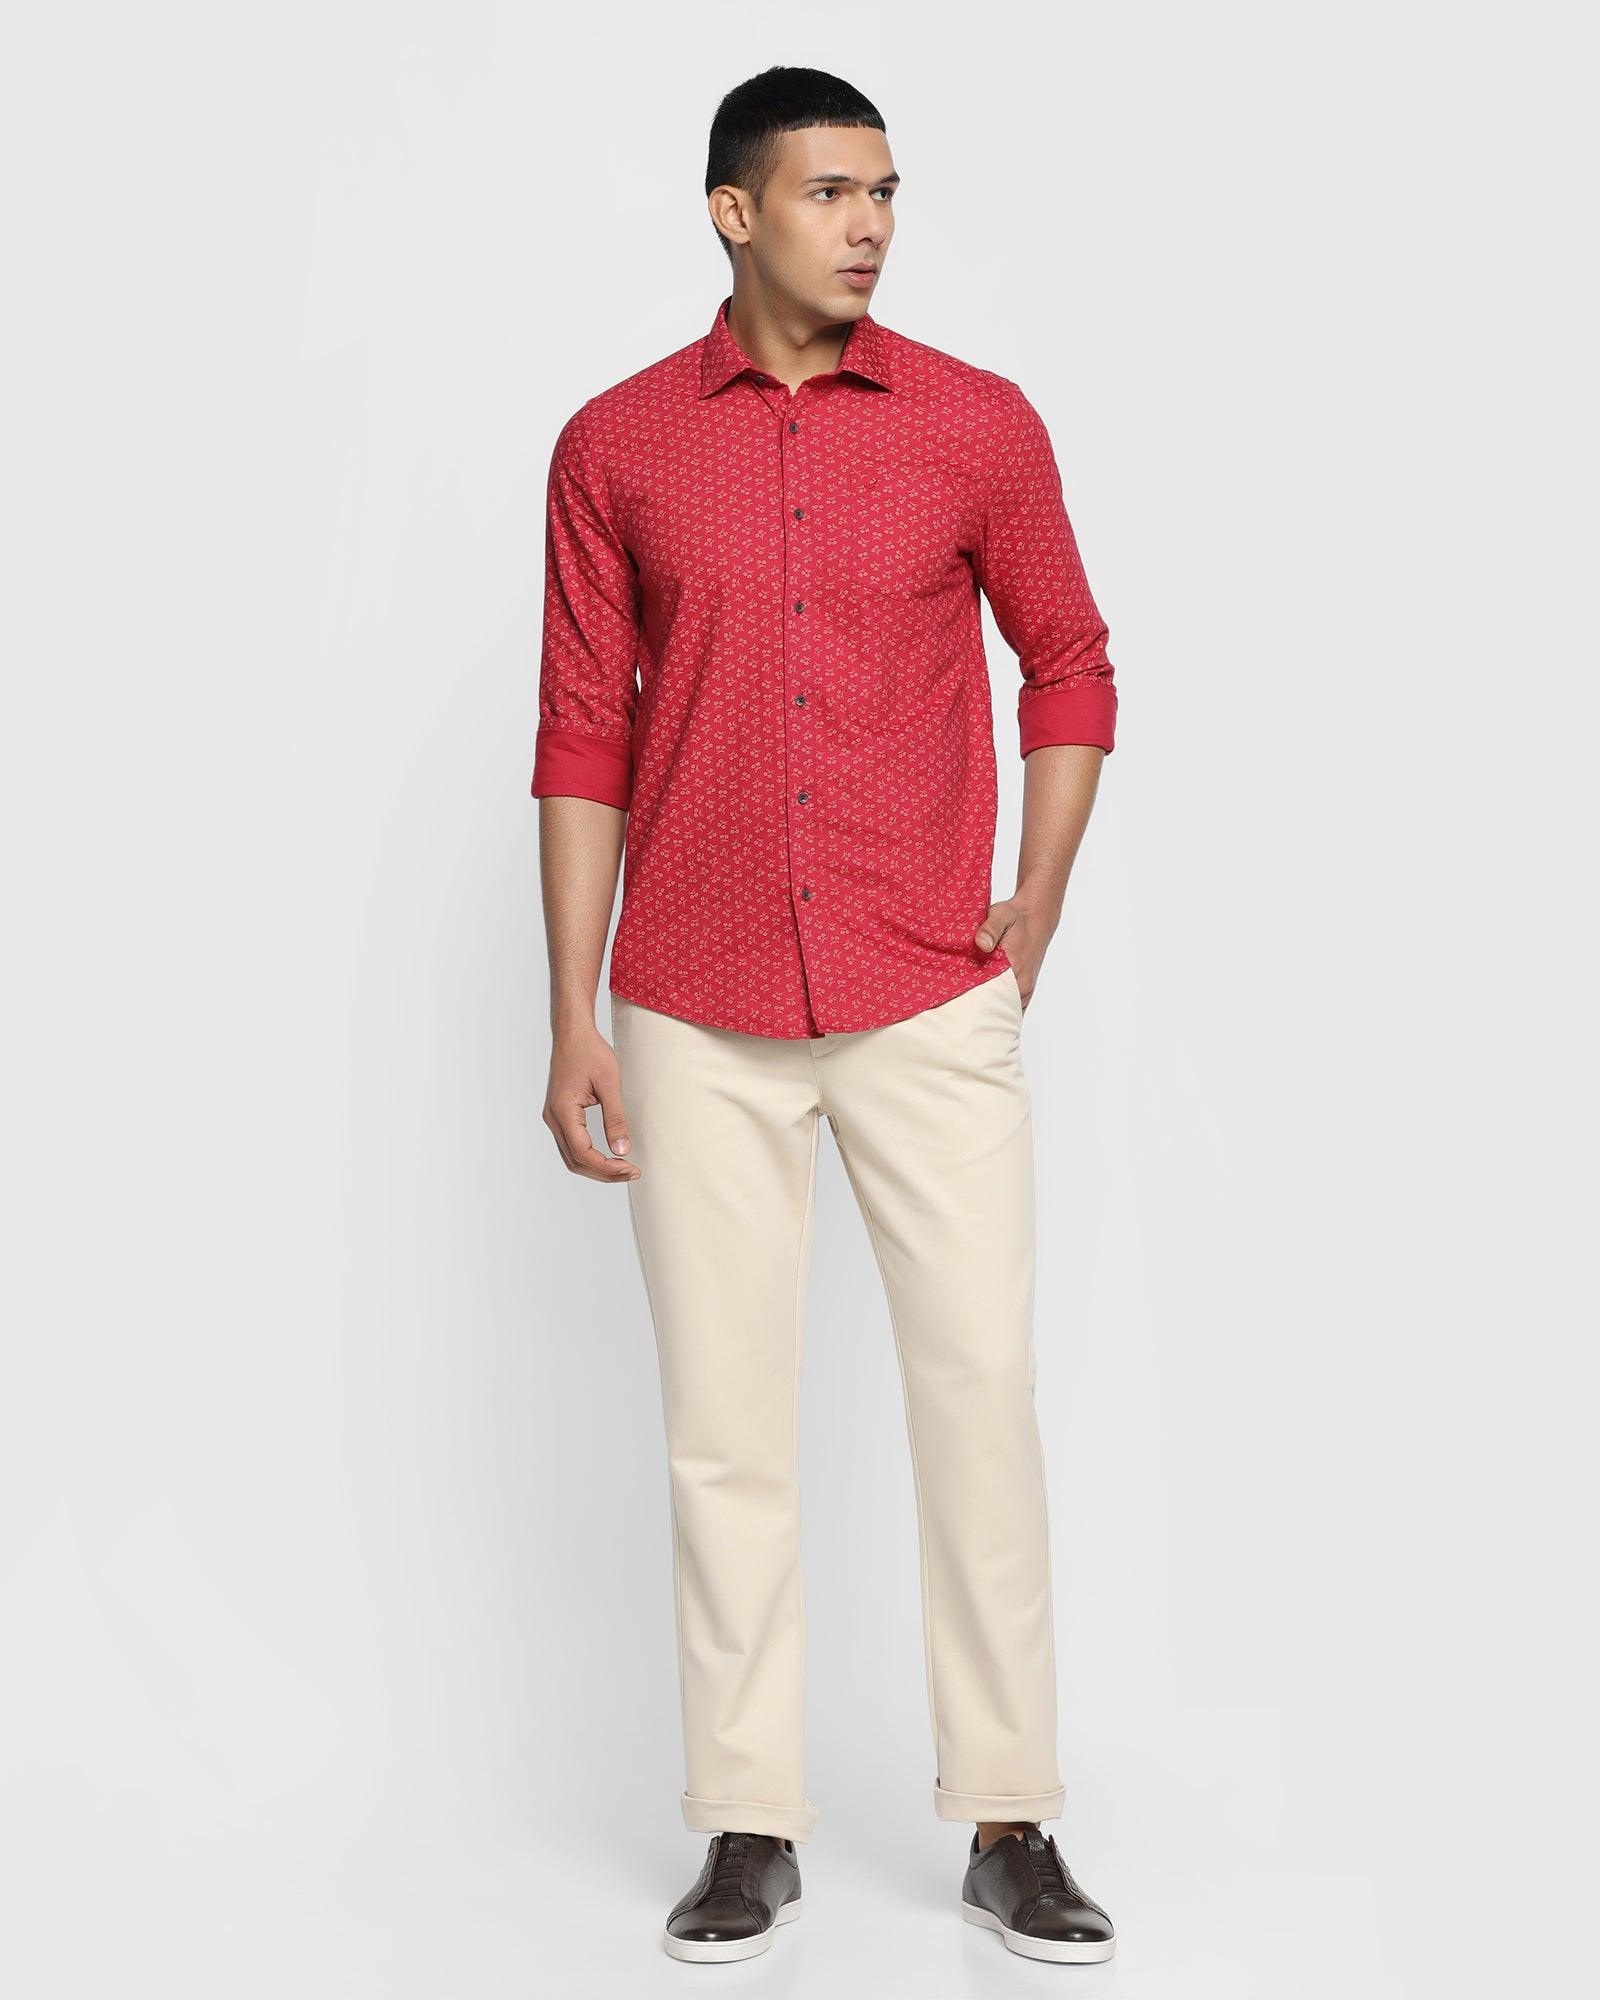 Girl Shirt White Pants Red Coat Stock Photo 715624621 | Shutterstock